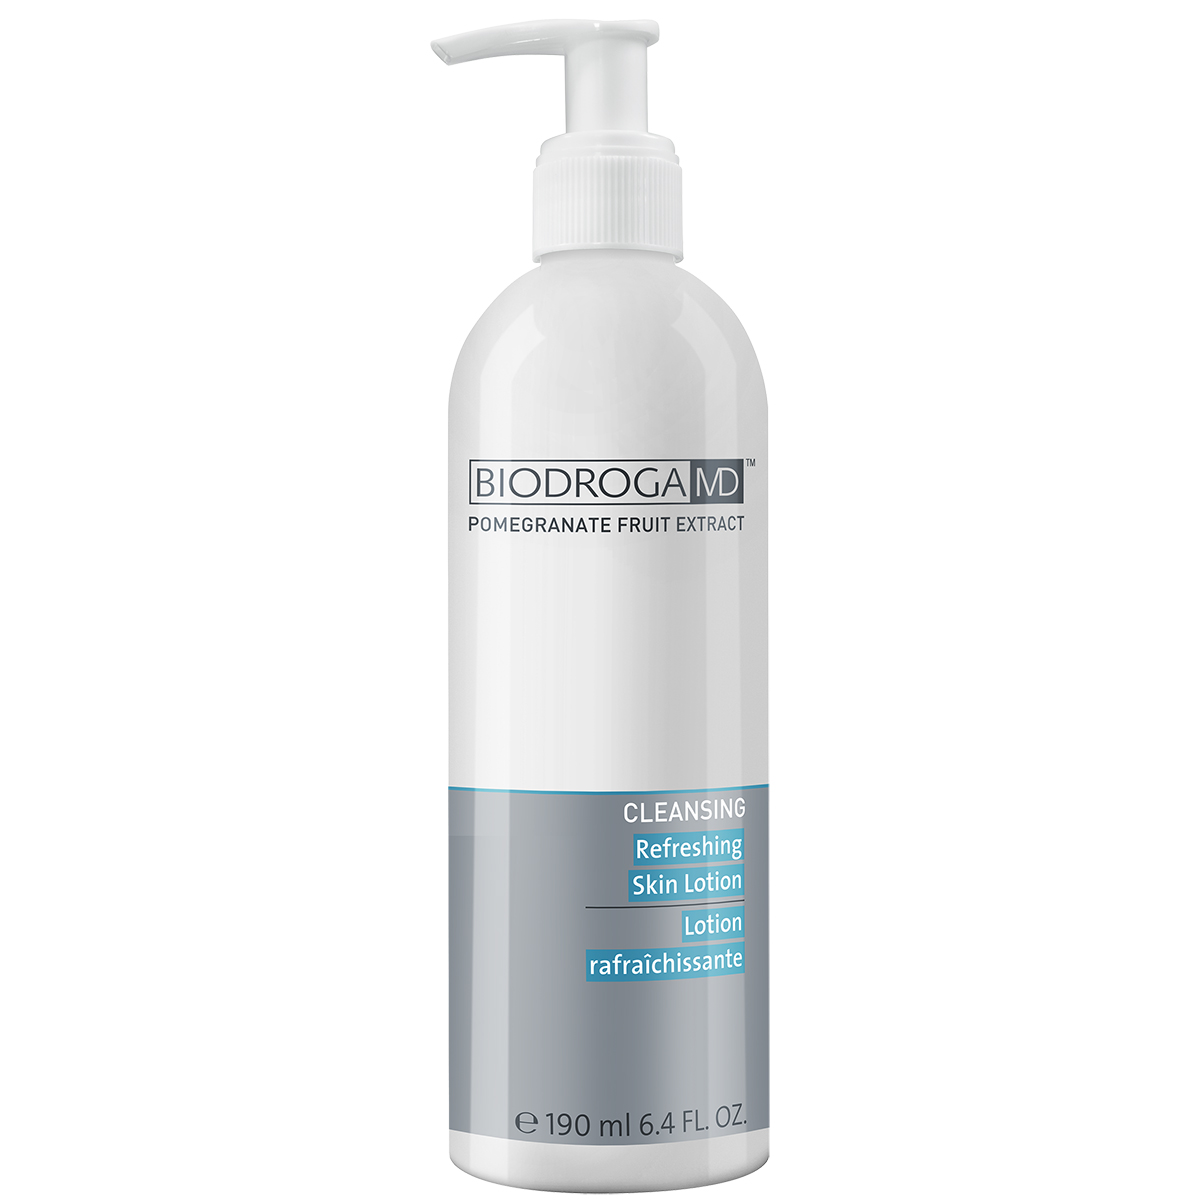 Biodroga Md Cleansing Refreshing Skin Lotion